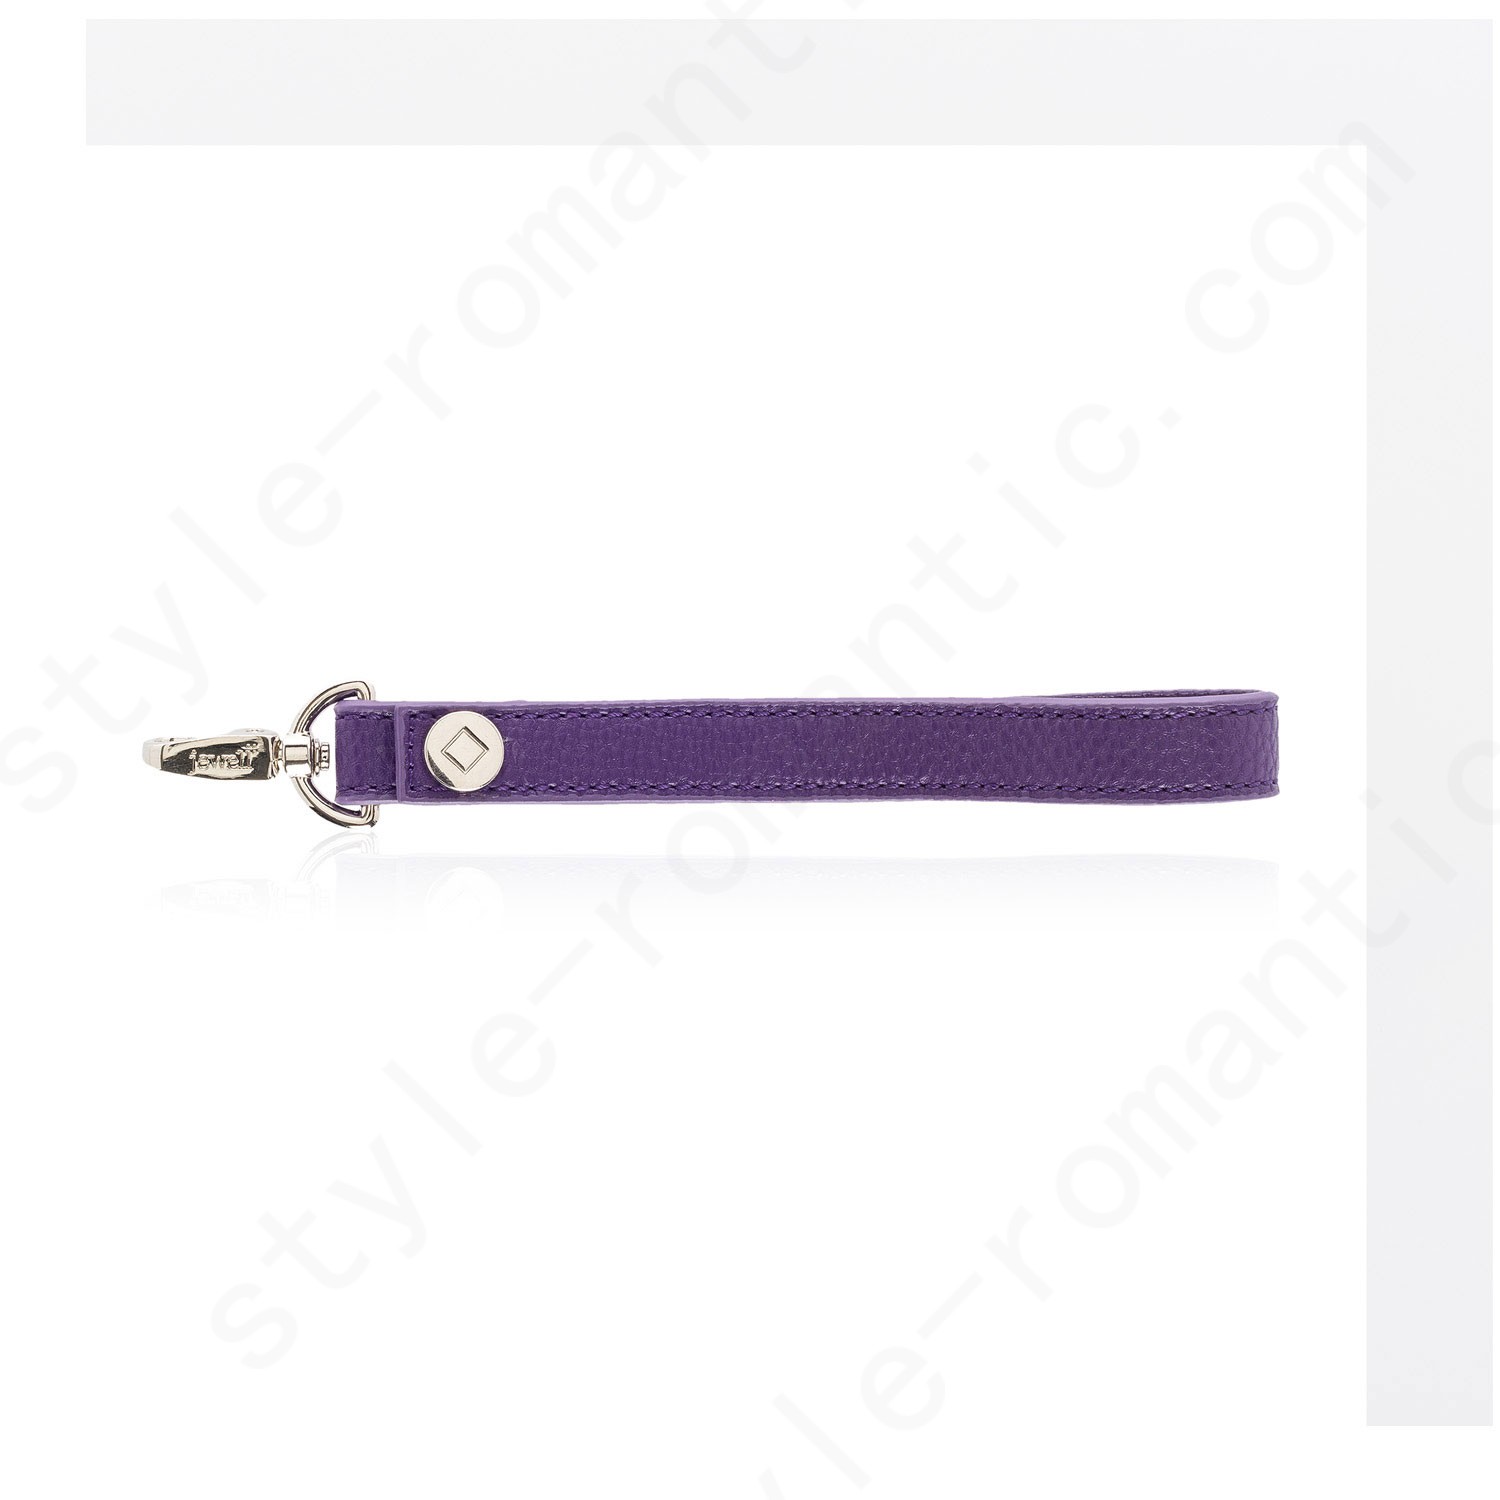 Thirty-One Gifts Wristlet Strap - Posh Purple Pebble Handbags Accessories - Thirty-One Gifts Wristlet Strap - Posh Purple Pebble Handbags Accessories